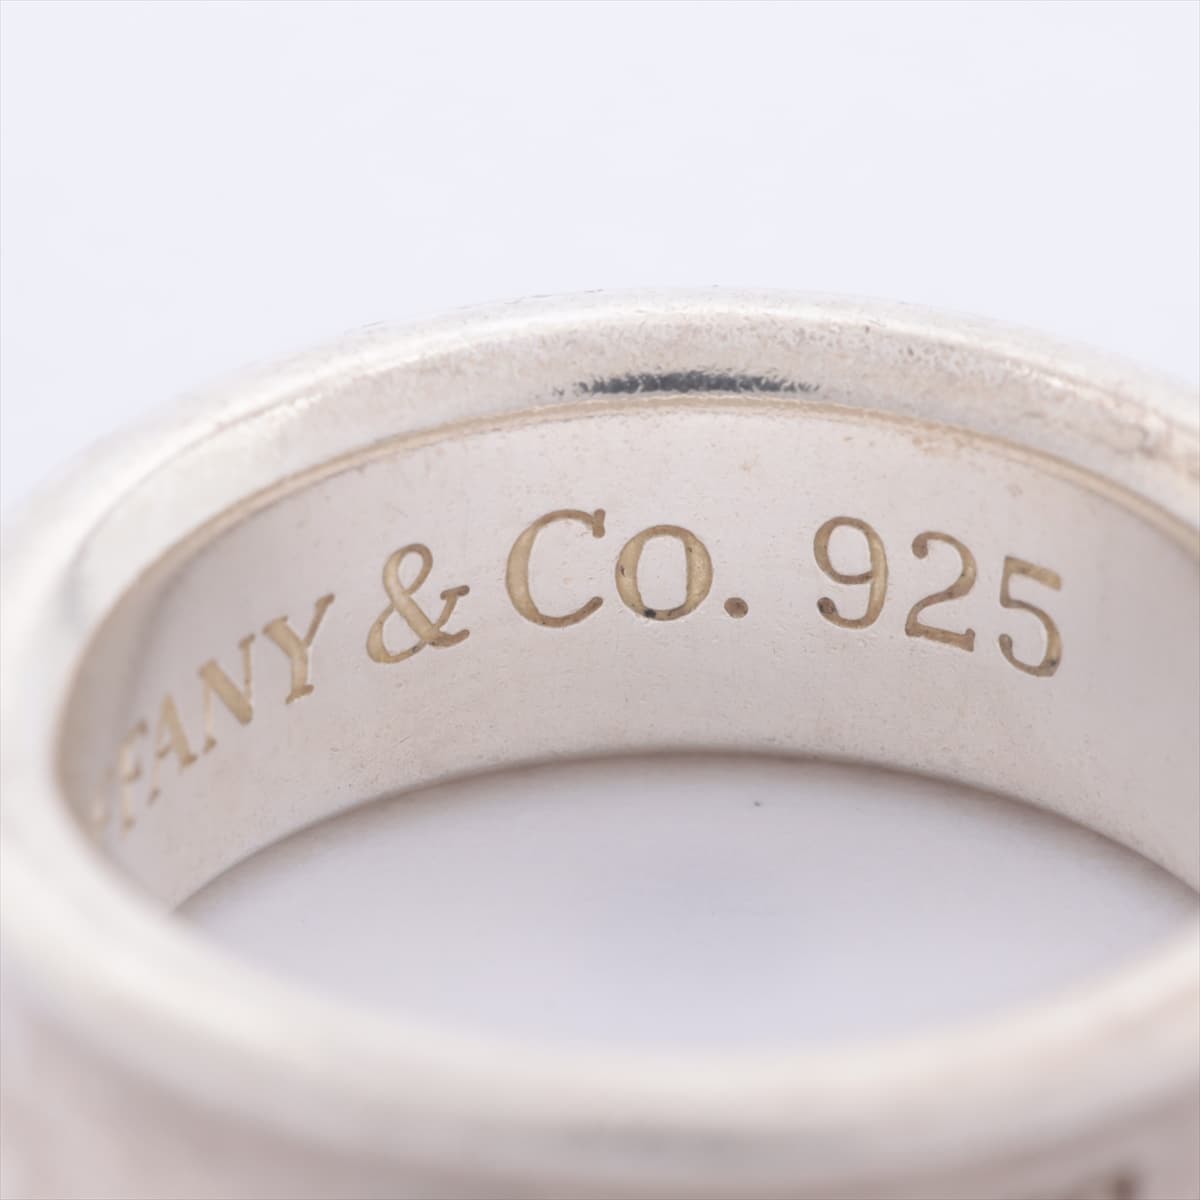 Tiffany 1837 Narrow rings 925 7.0g Silver